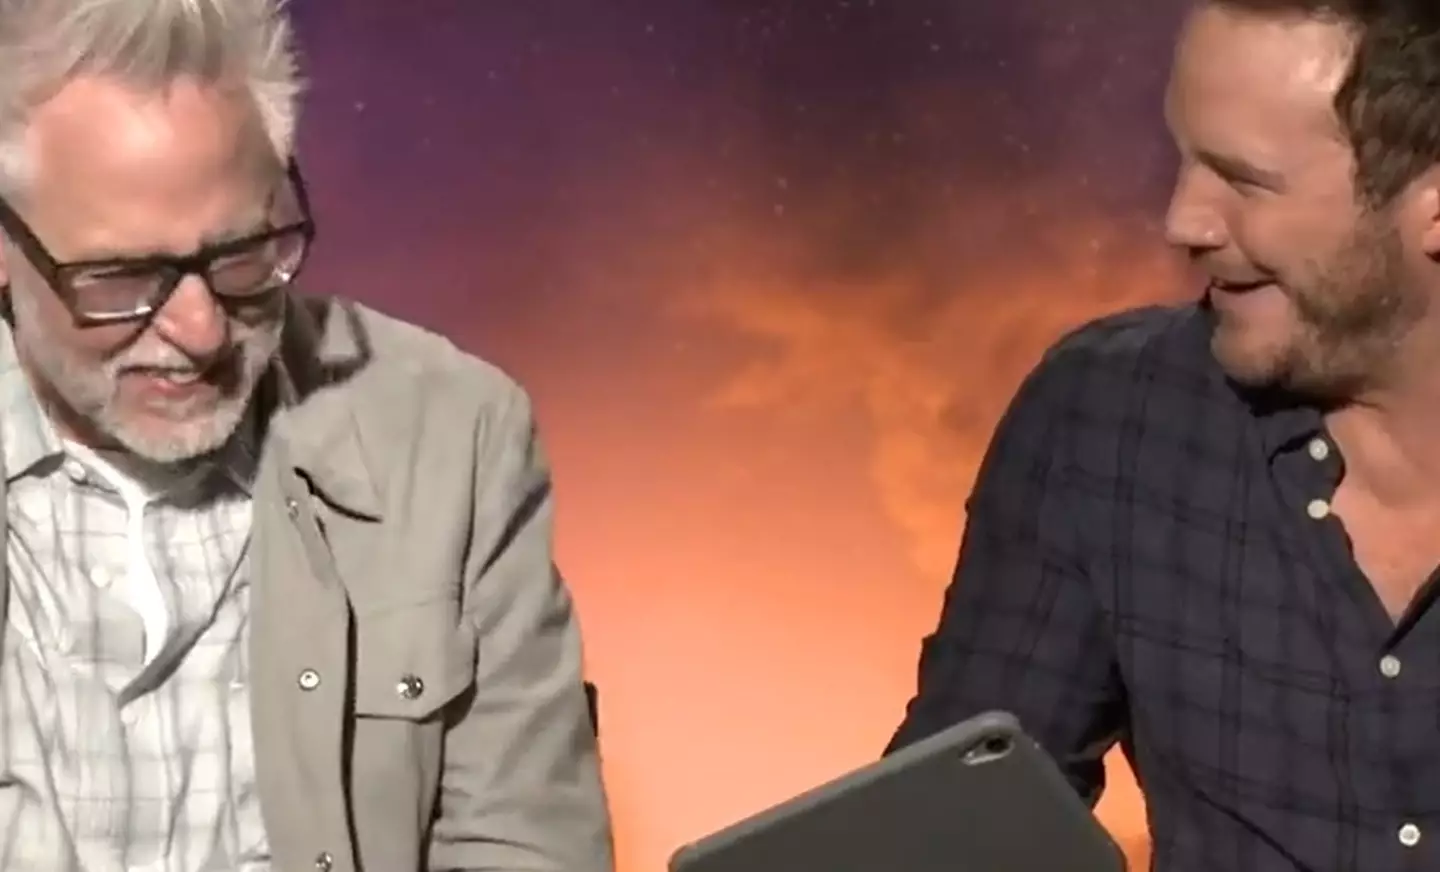 James Gunn was left howling with laughter at Chris Pratt's very NSFW joke.